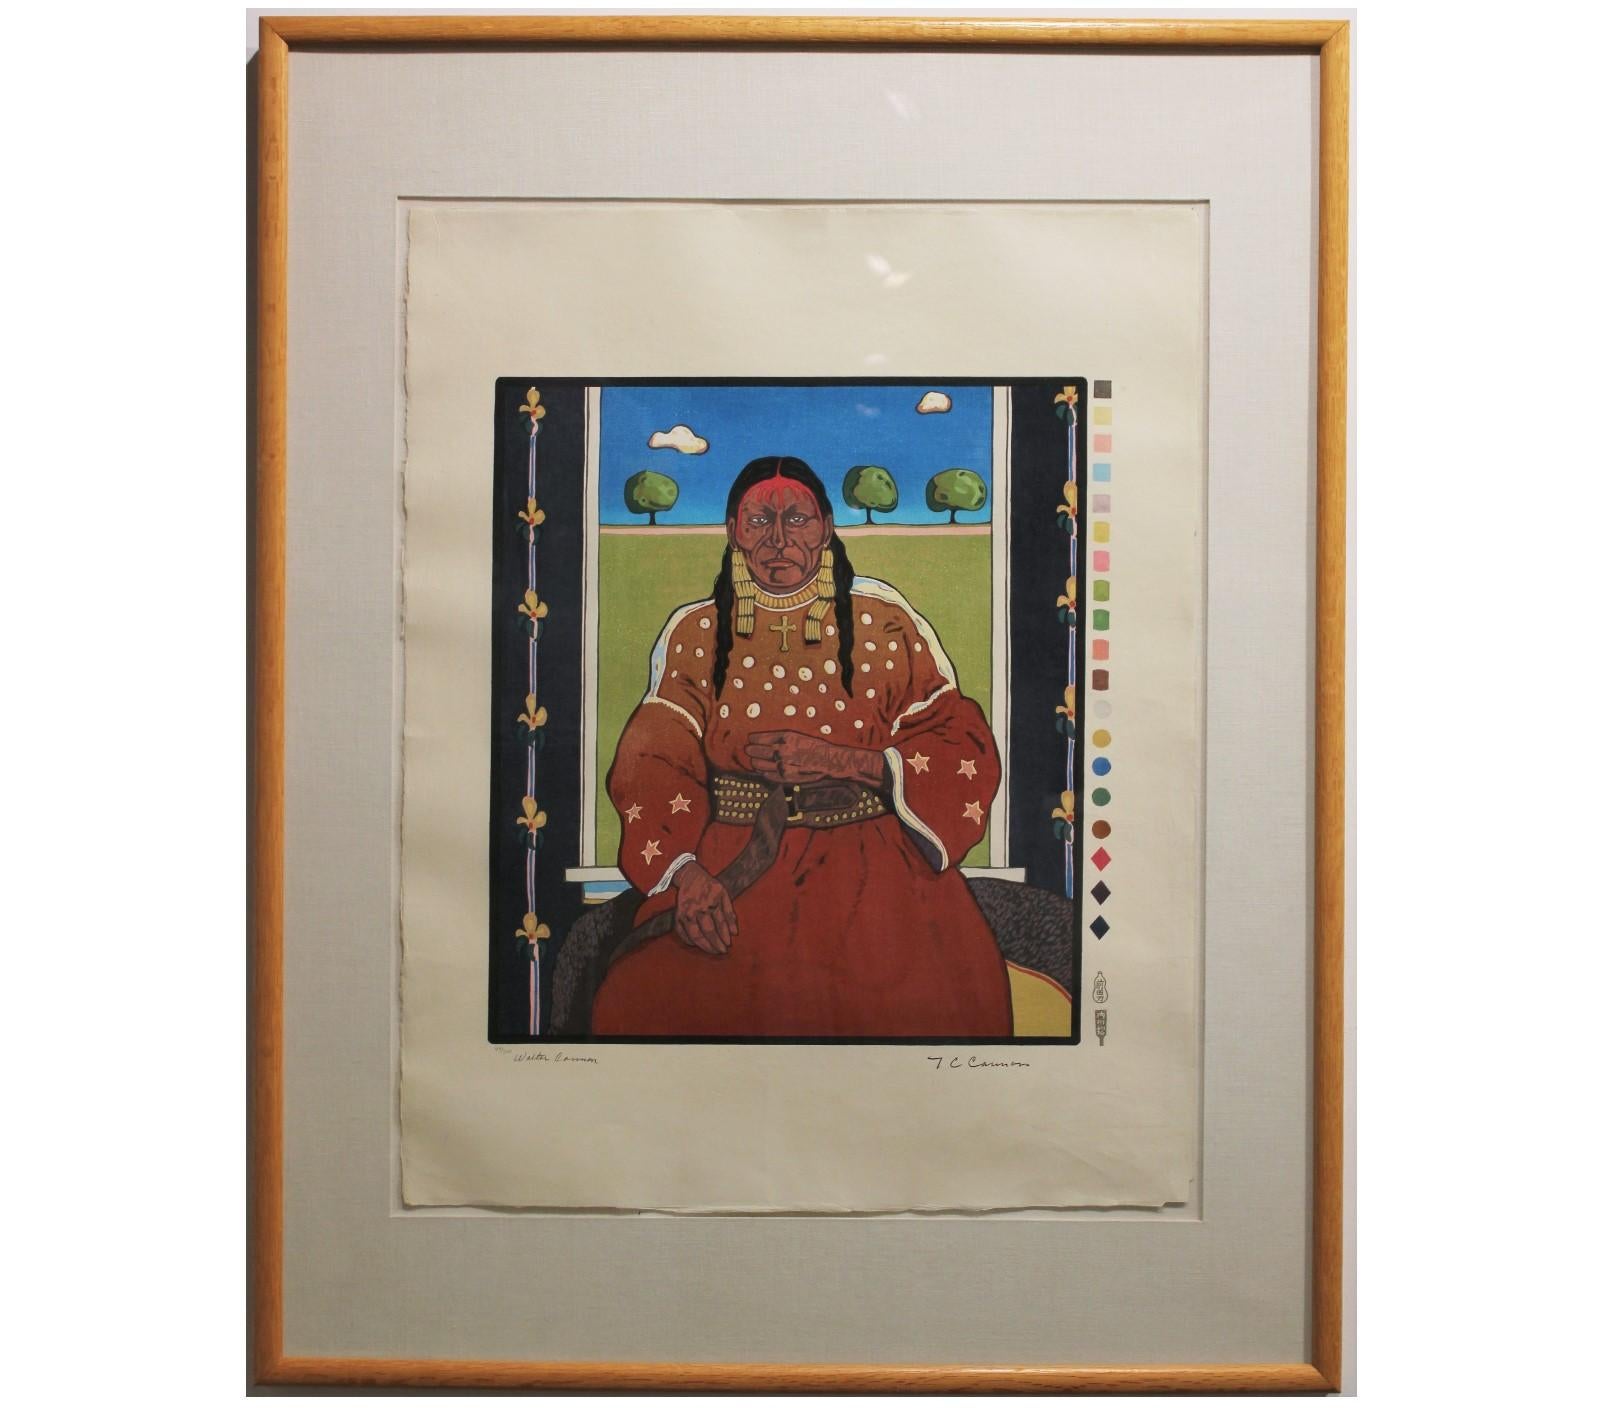 T.C. Cannon Portrait Print - "Woman at the Window" - Print 44/200 Native American Woodcut Portrait